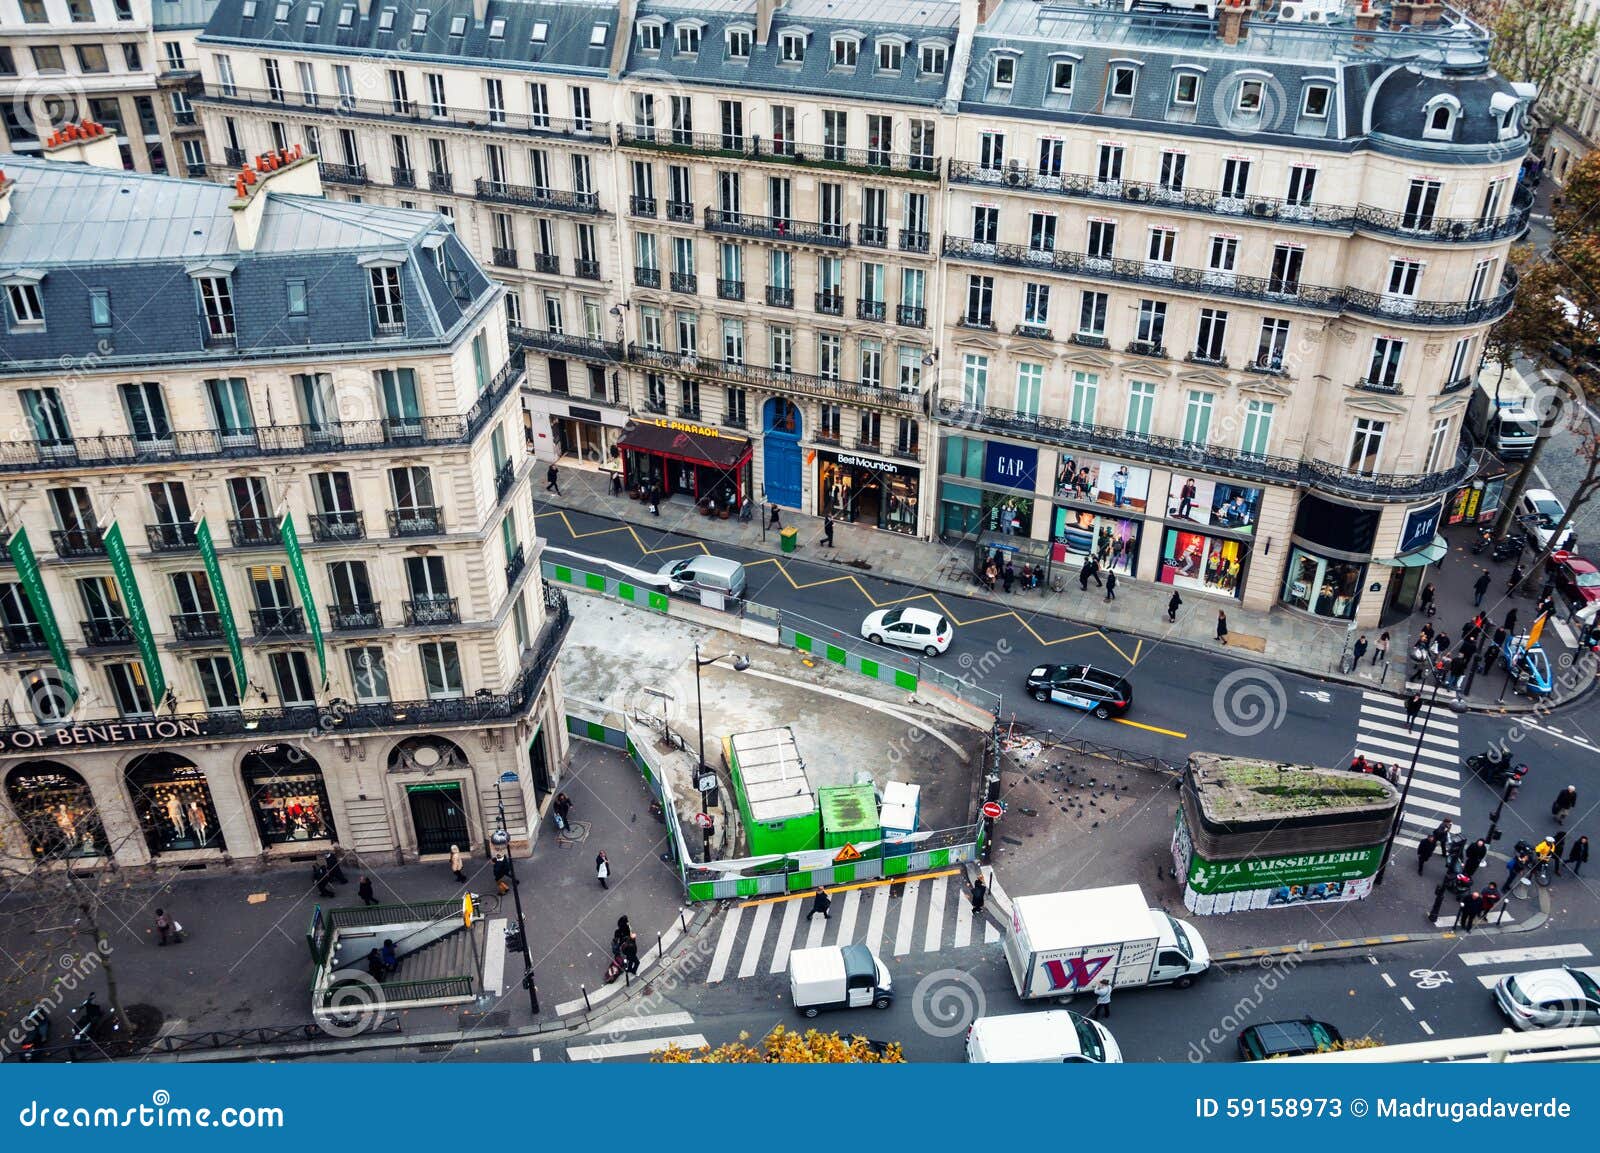 Paris, France City Center Editorial Stock Photo - Image: 59158973